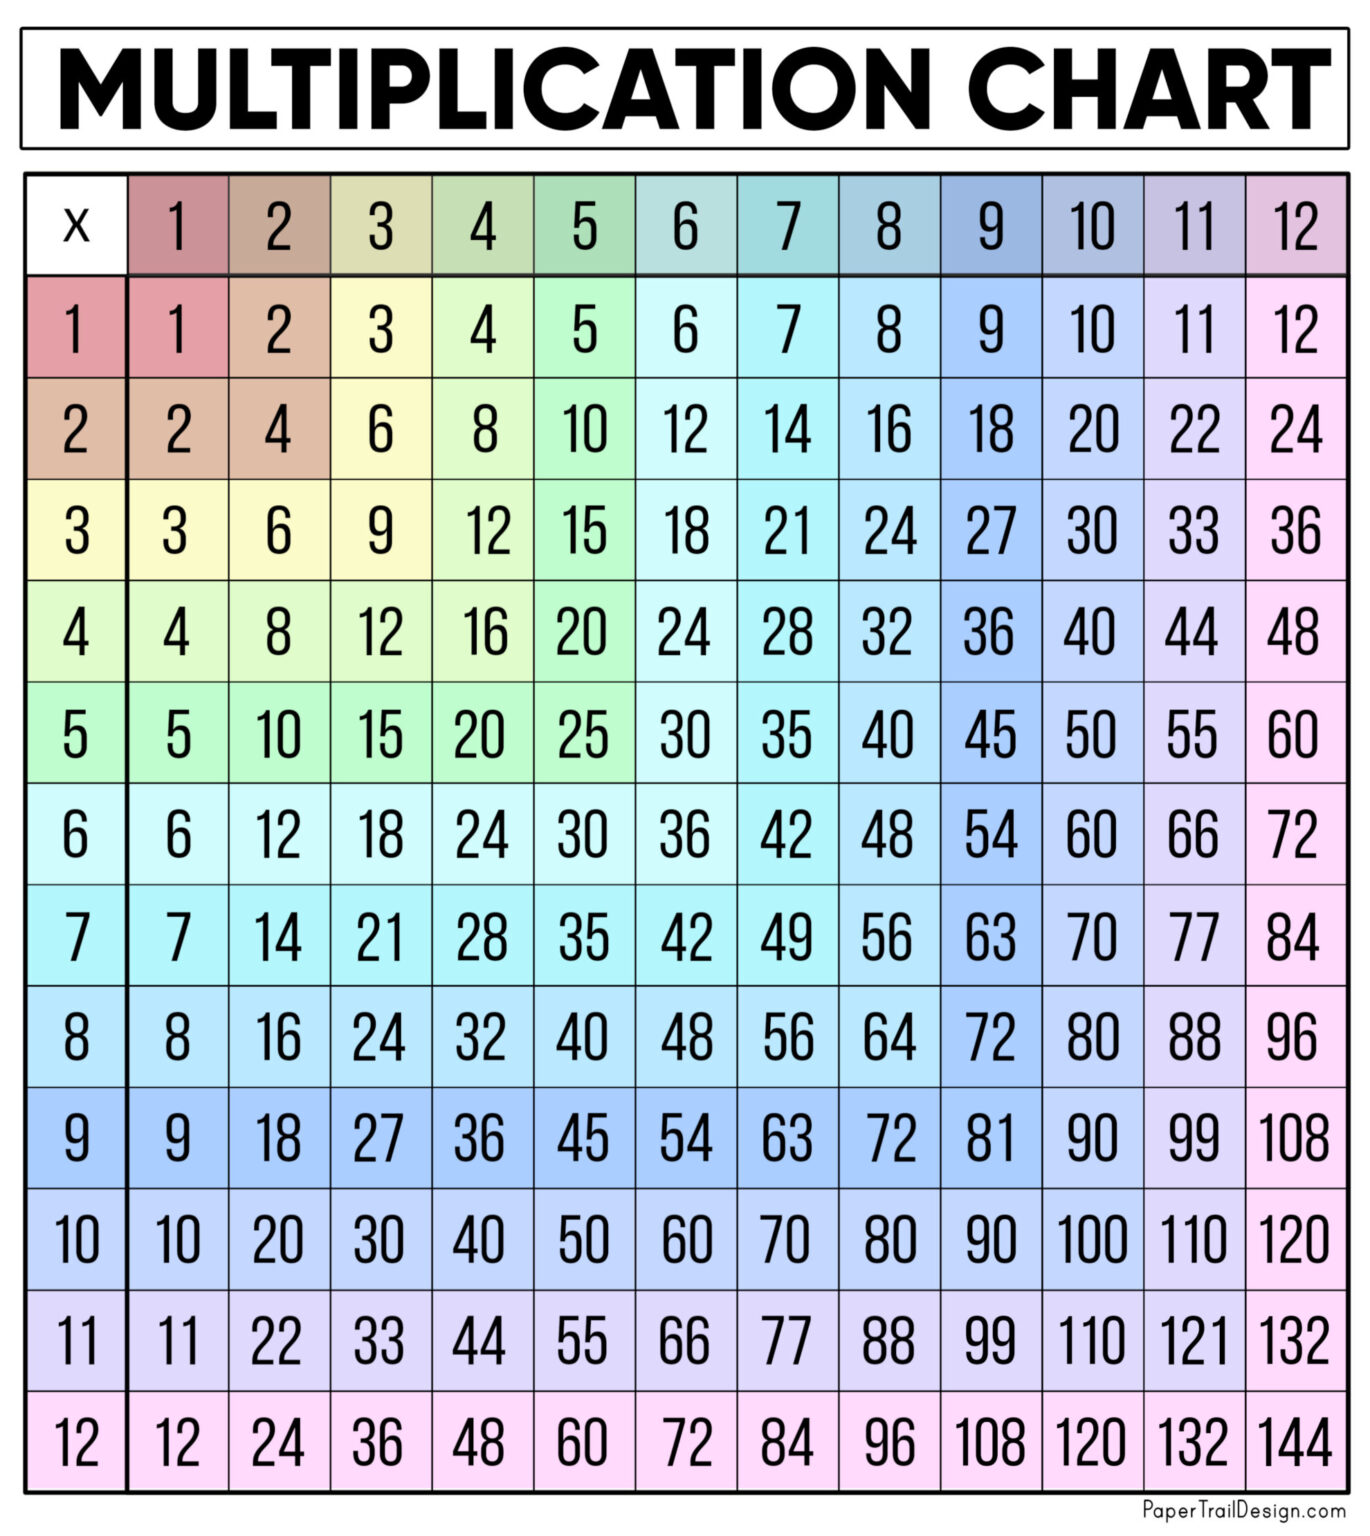 Multiplication table chart printable vinajes